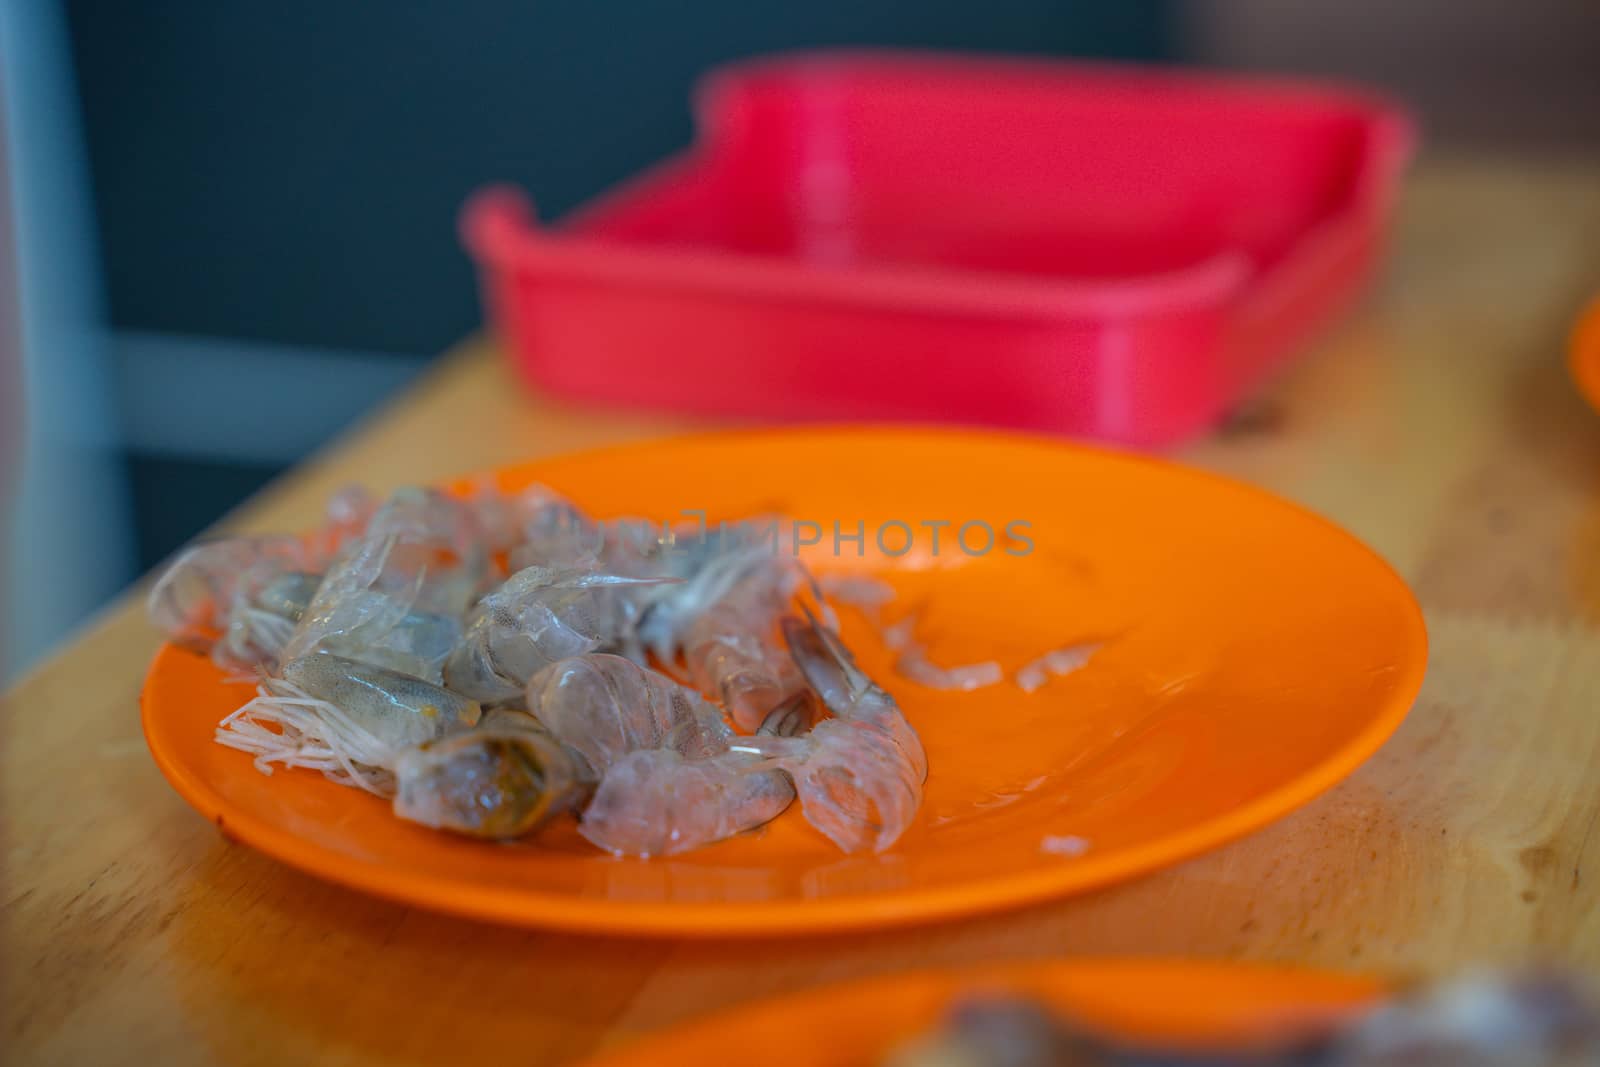 A pile of peeled shrimp shell on the orange plate